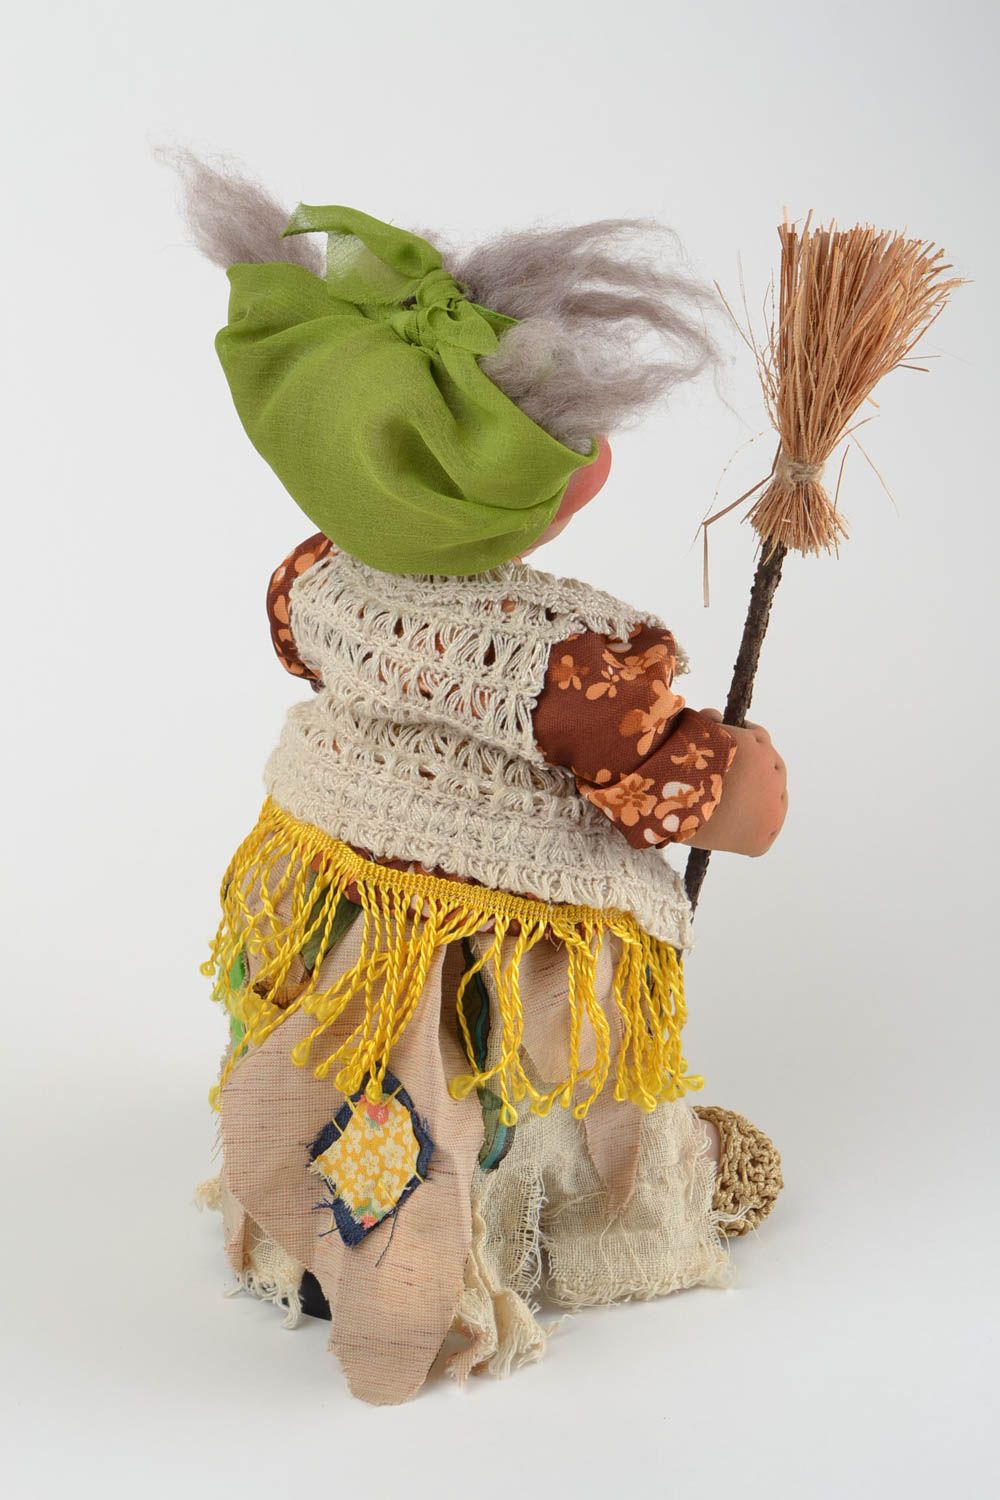 Handmade fabric doll baba yaga toy for children designer home decoration ideas photo 5